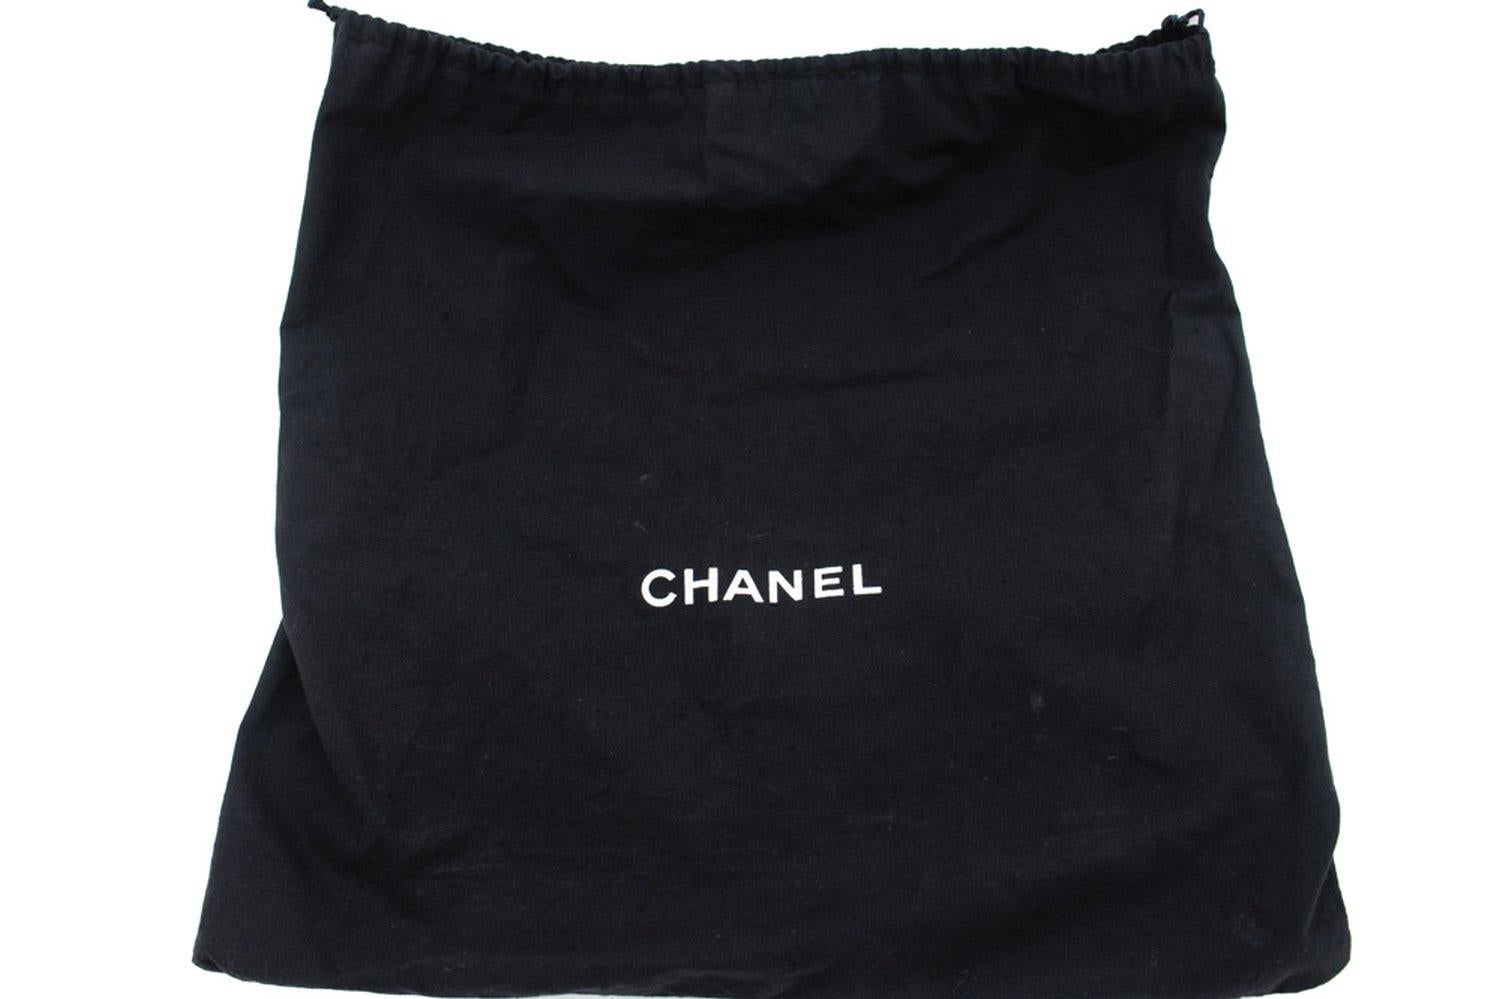 CHANEL Silver Medallion Caviar Shoulder Shopping Tote Bag Black SV 10